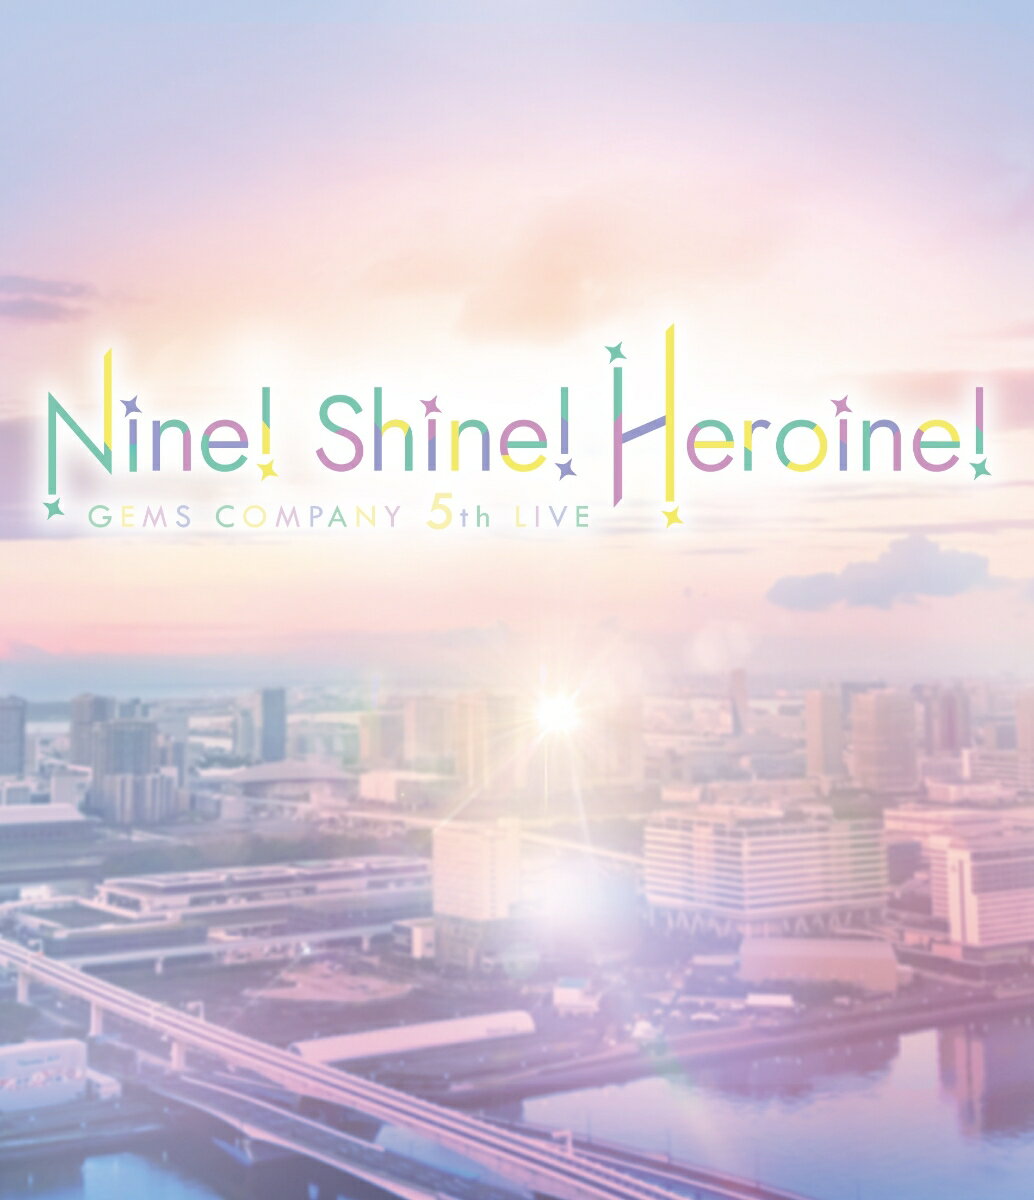 GEMS COMPANY 5th LIVE 「Nine! Shine! Heroine!」 LIVE Blu-ray【Blu-ray】 [ GEMS COMPANY ]